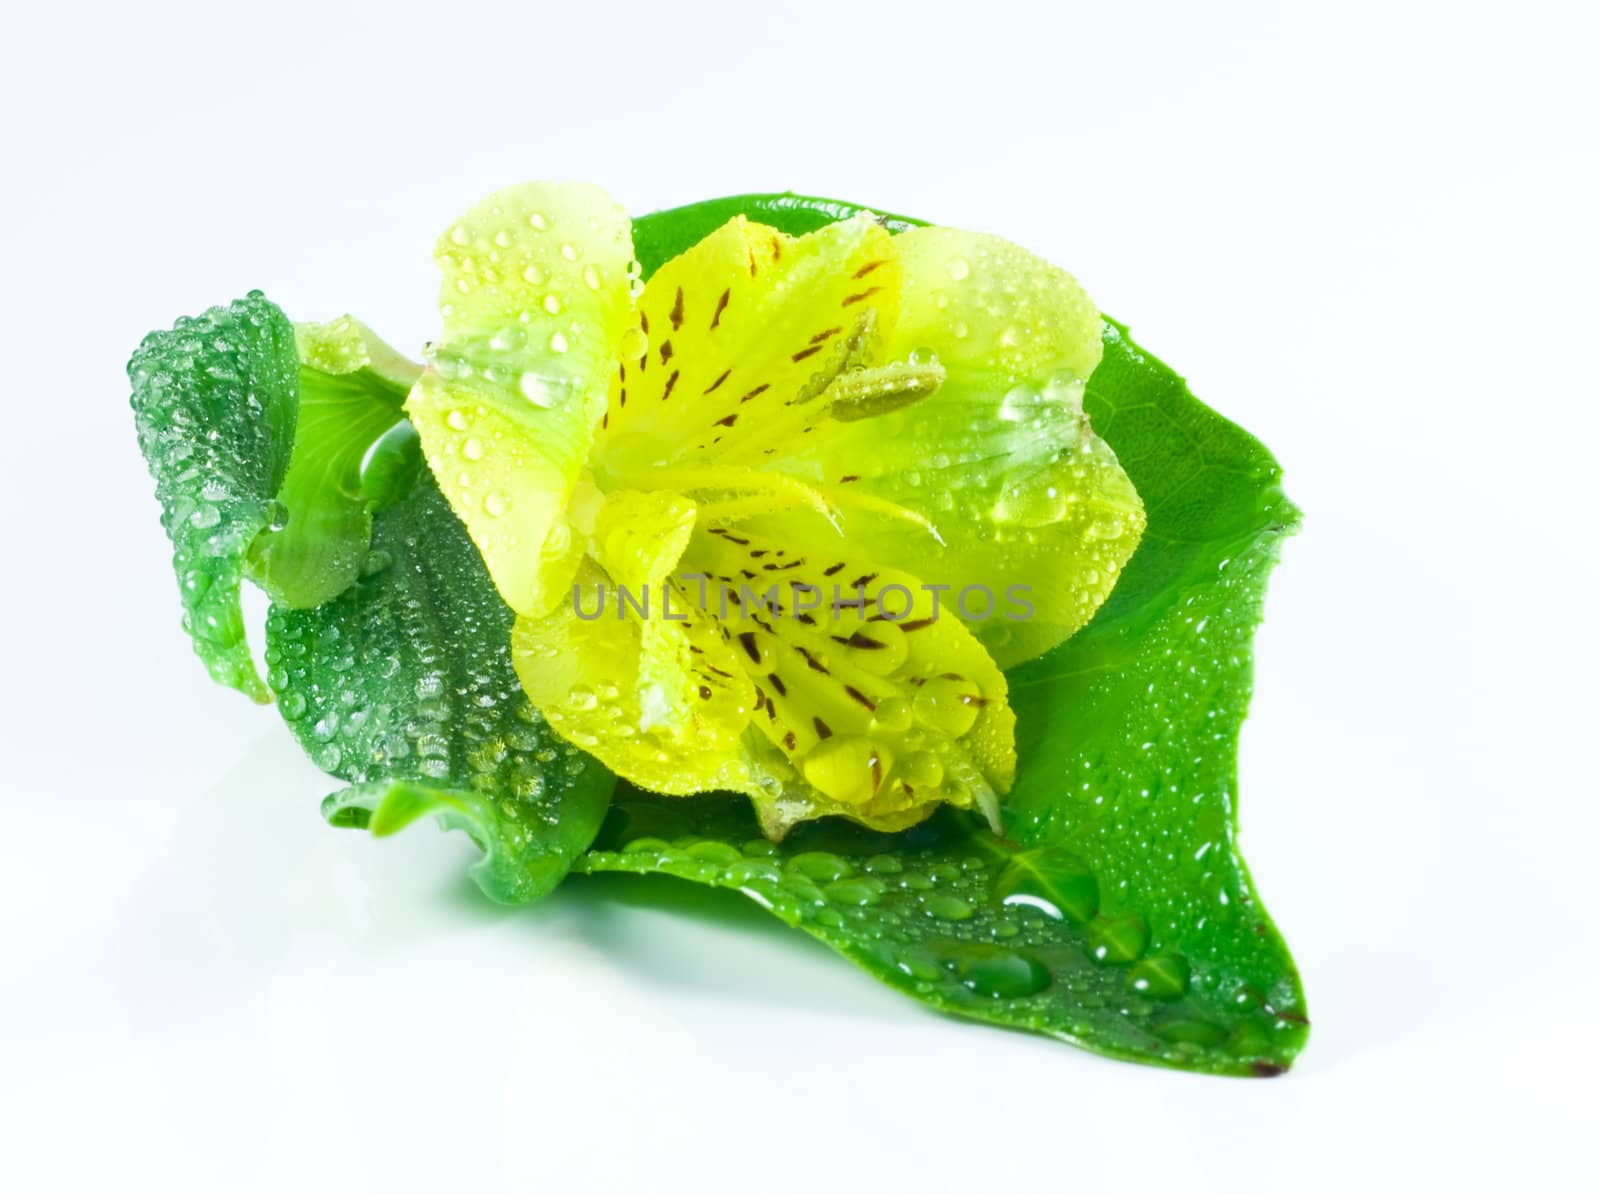 yellow flower on a green leaf
